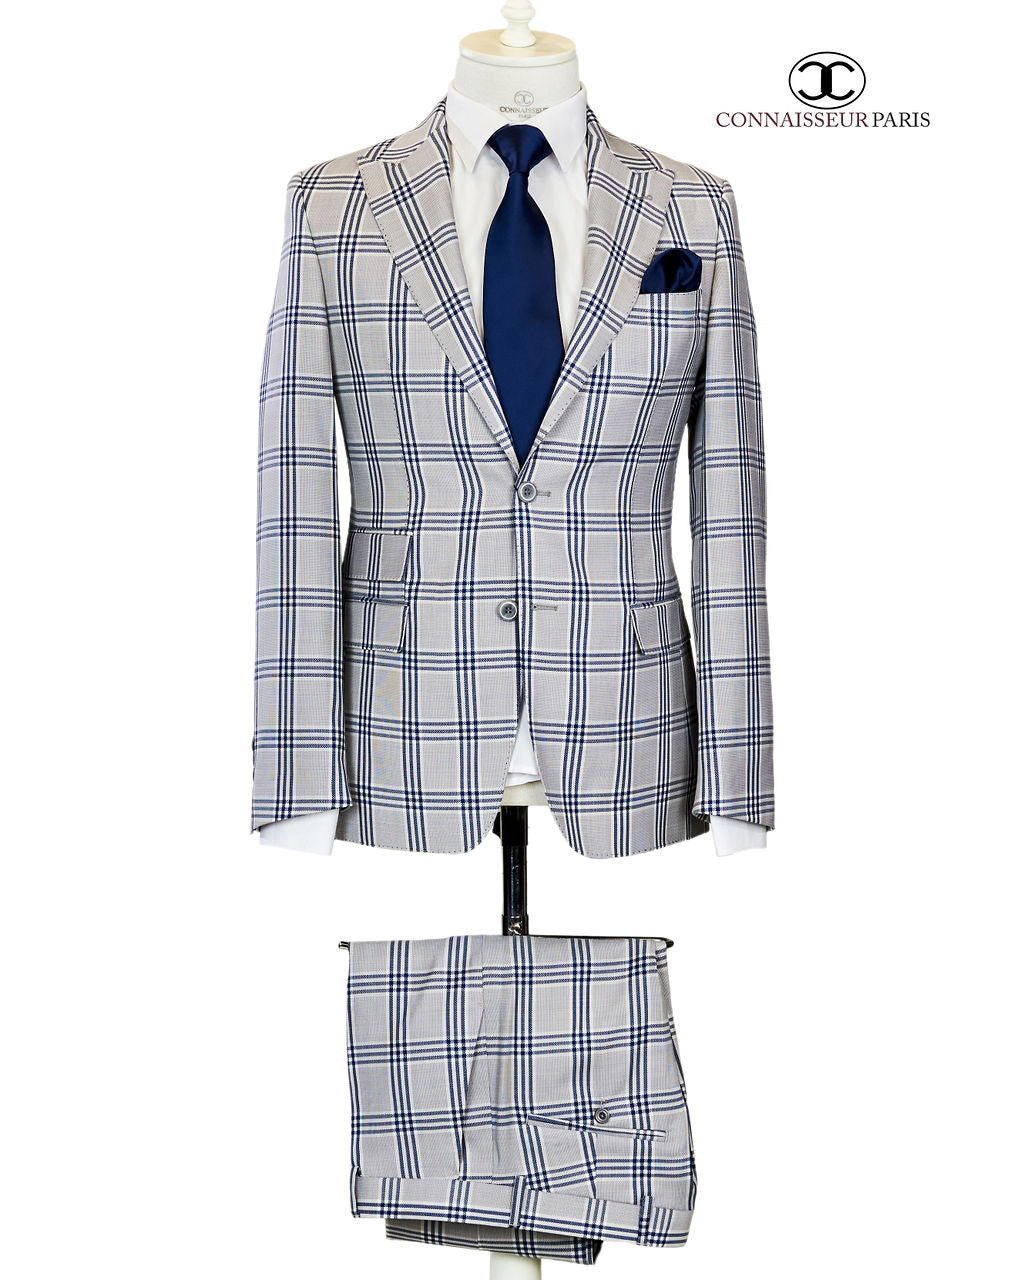 Cerruti - Light grey with navy blue plaid 2-piece slim fit suit